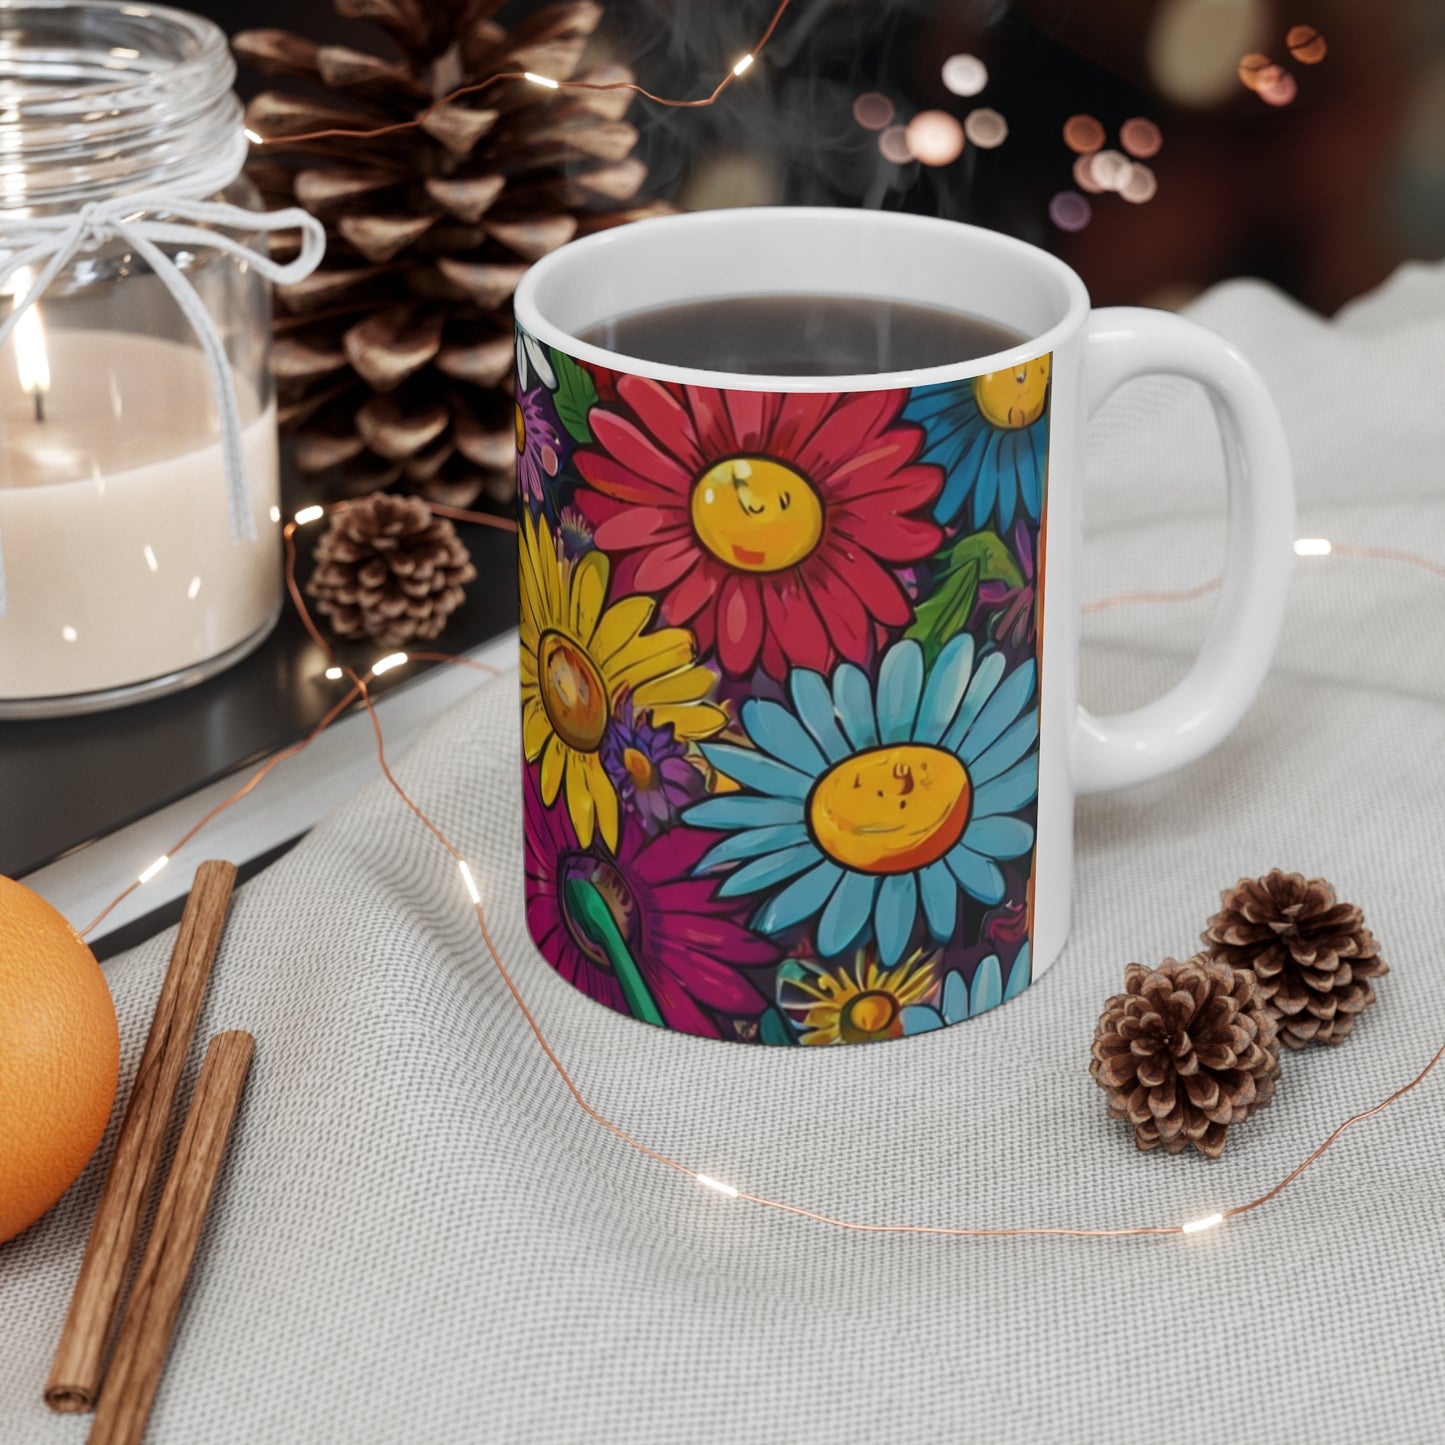 Colourful Daisy Flowers Mug - Ceramic Coffee Mug 11oz